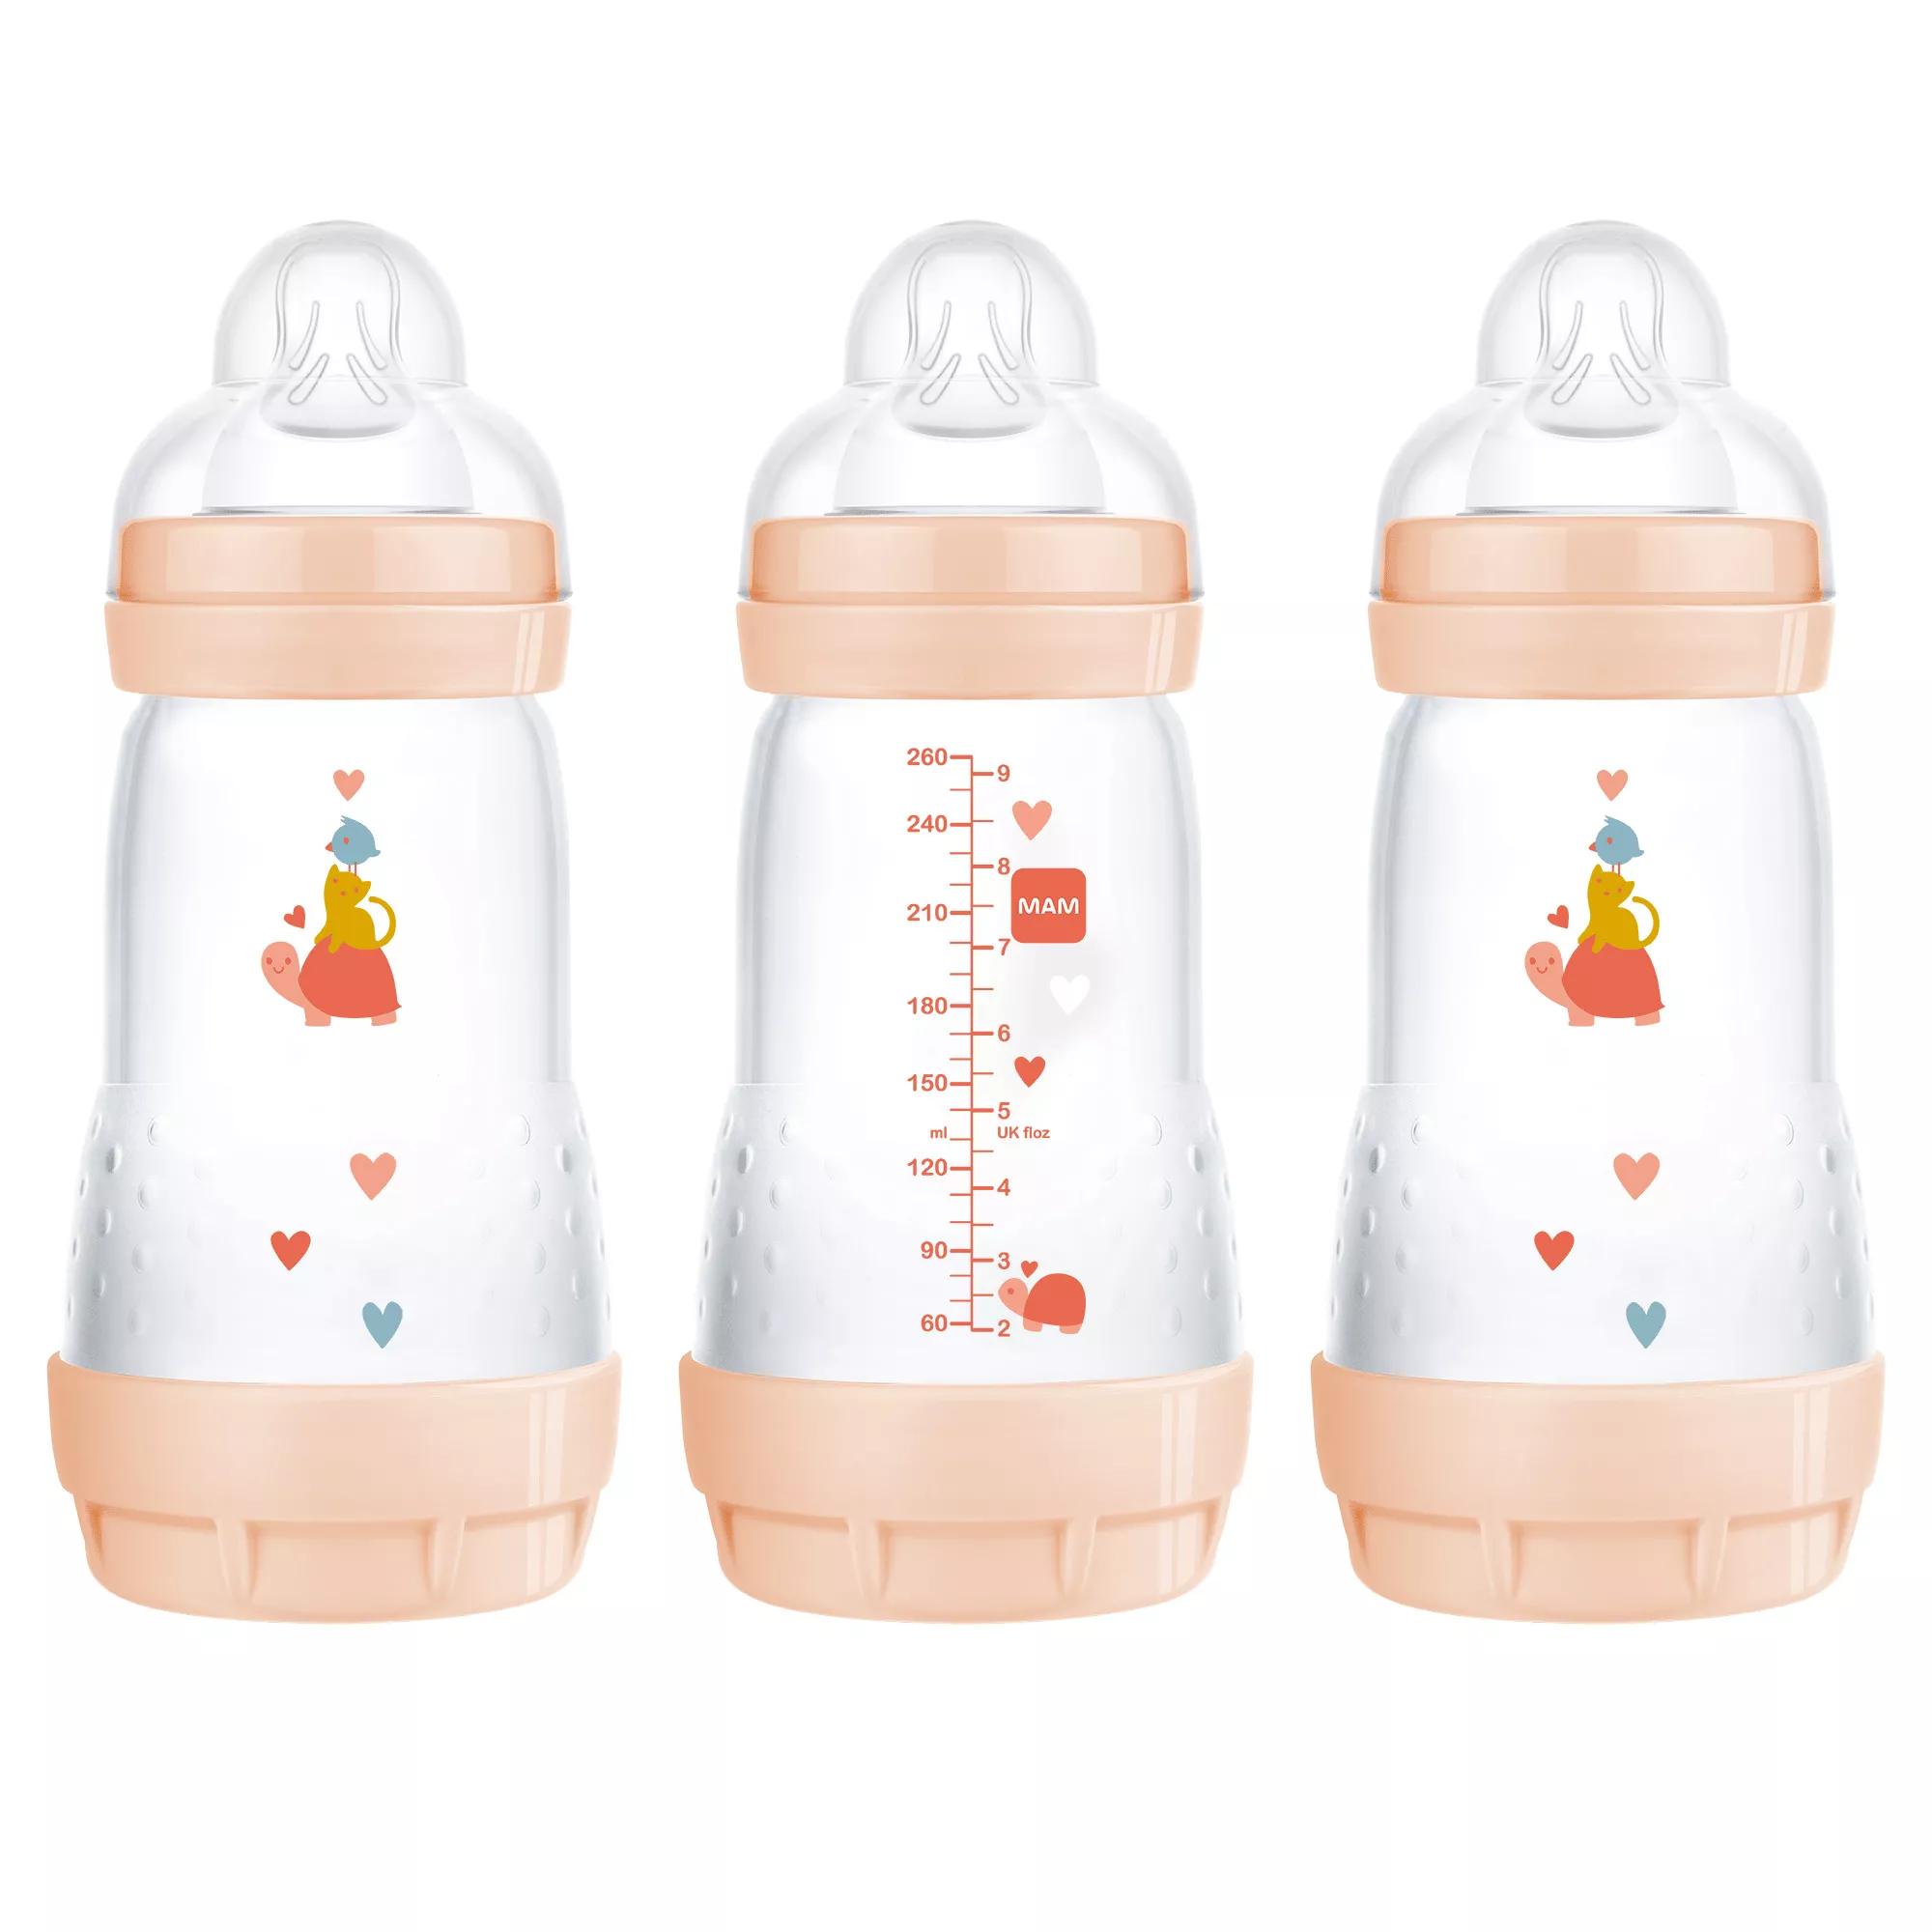 Silicone Baby Bottle 2 Pack Set - Leak Proof, Anti-Colic